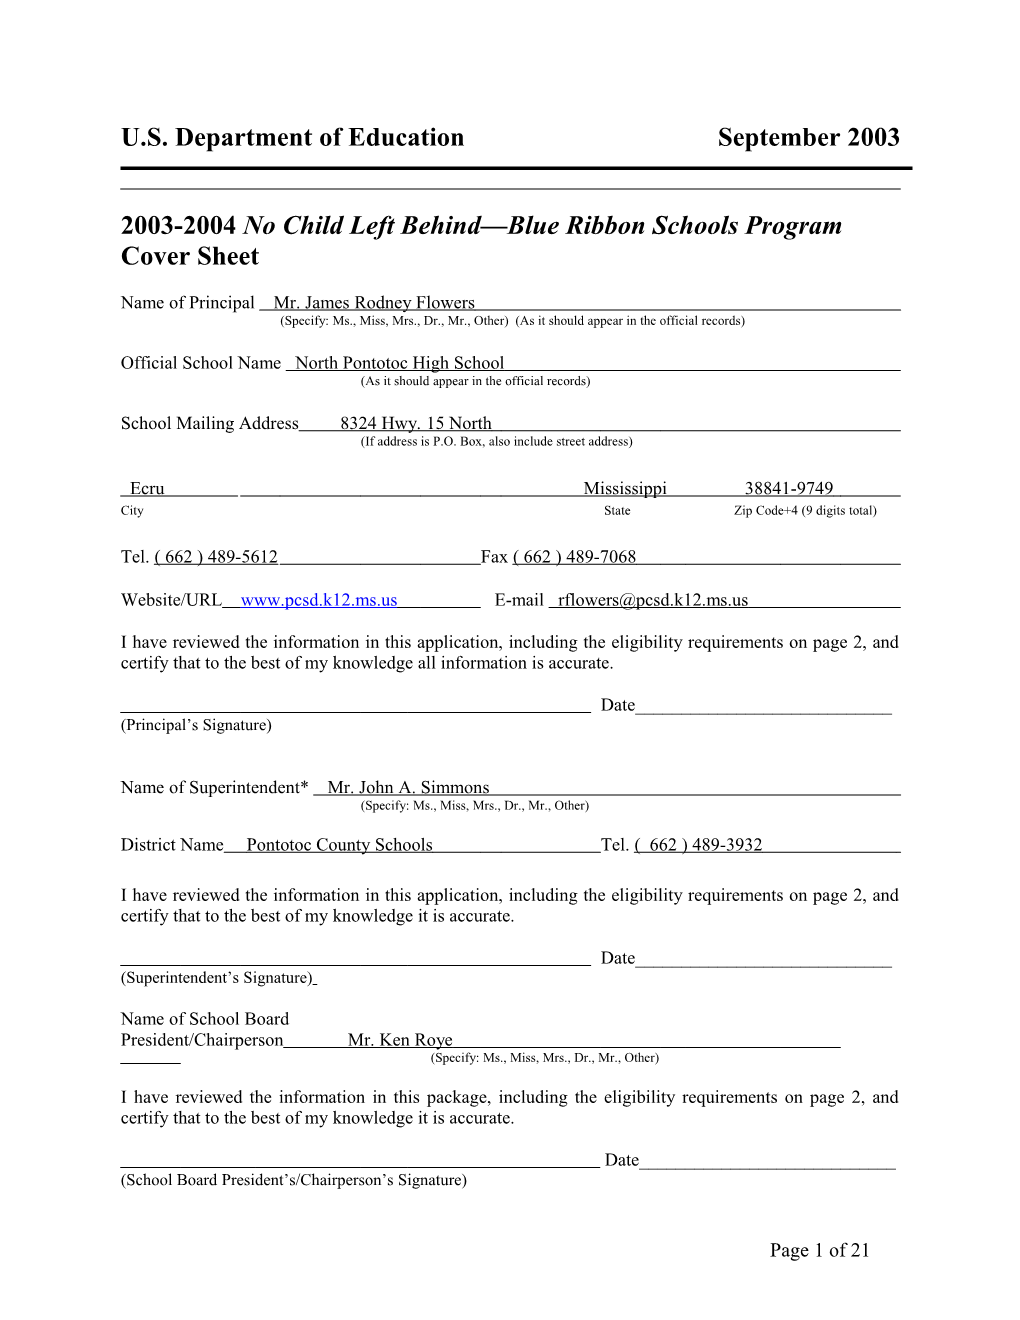 North Pontotoc High School 2004 No Child Left Behind-Blue Ribbon School Application (Msword)